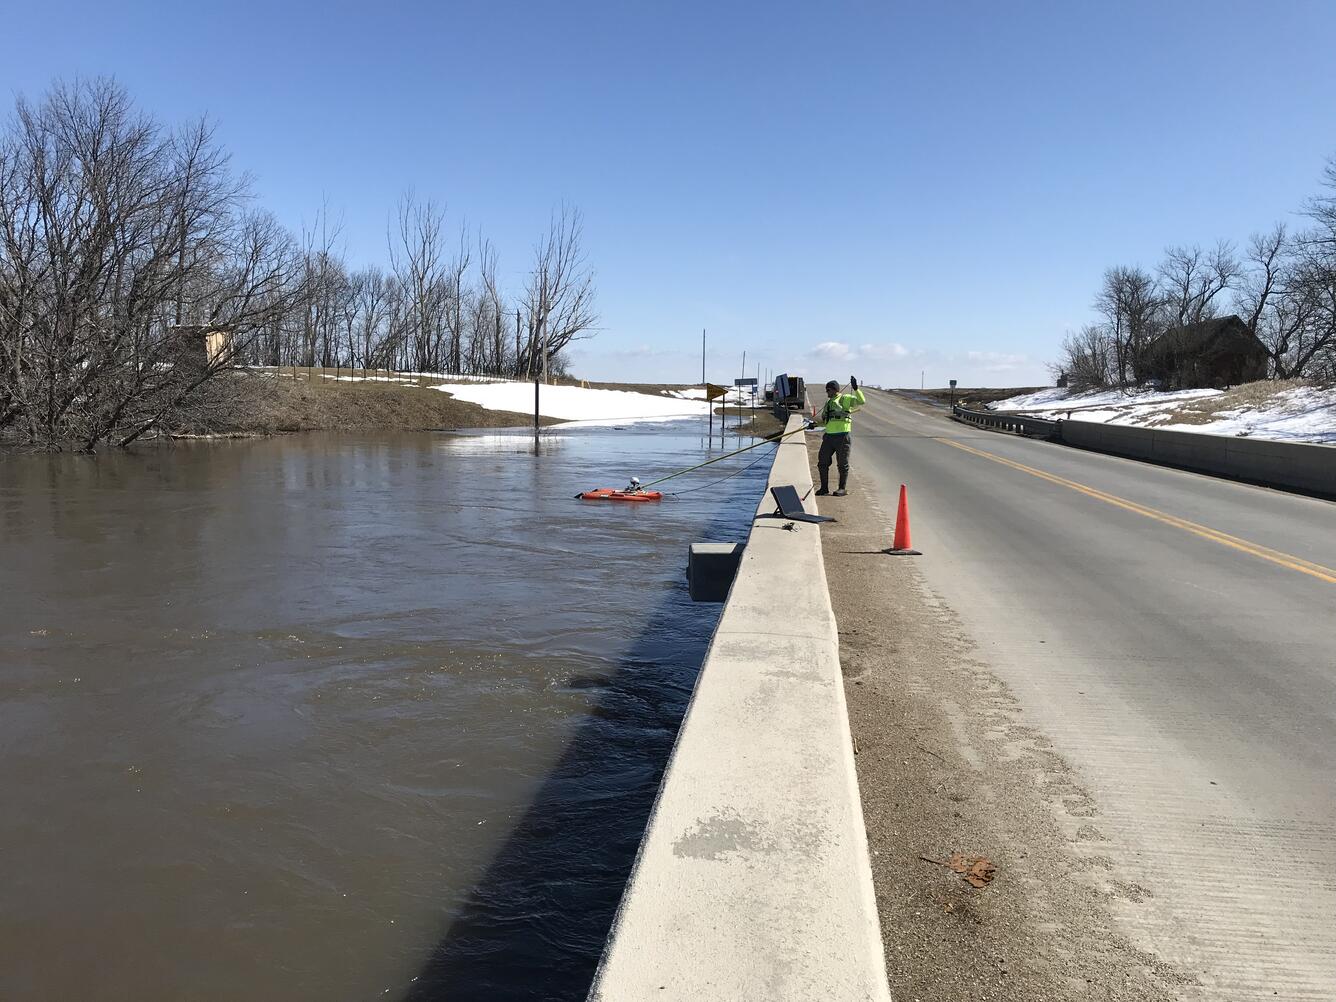 USGS Technician taking a water measurement from a bridge of floodwaters below